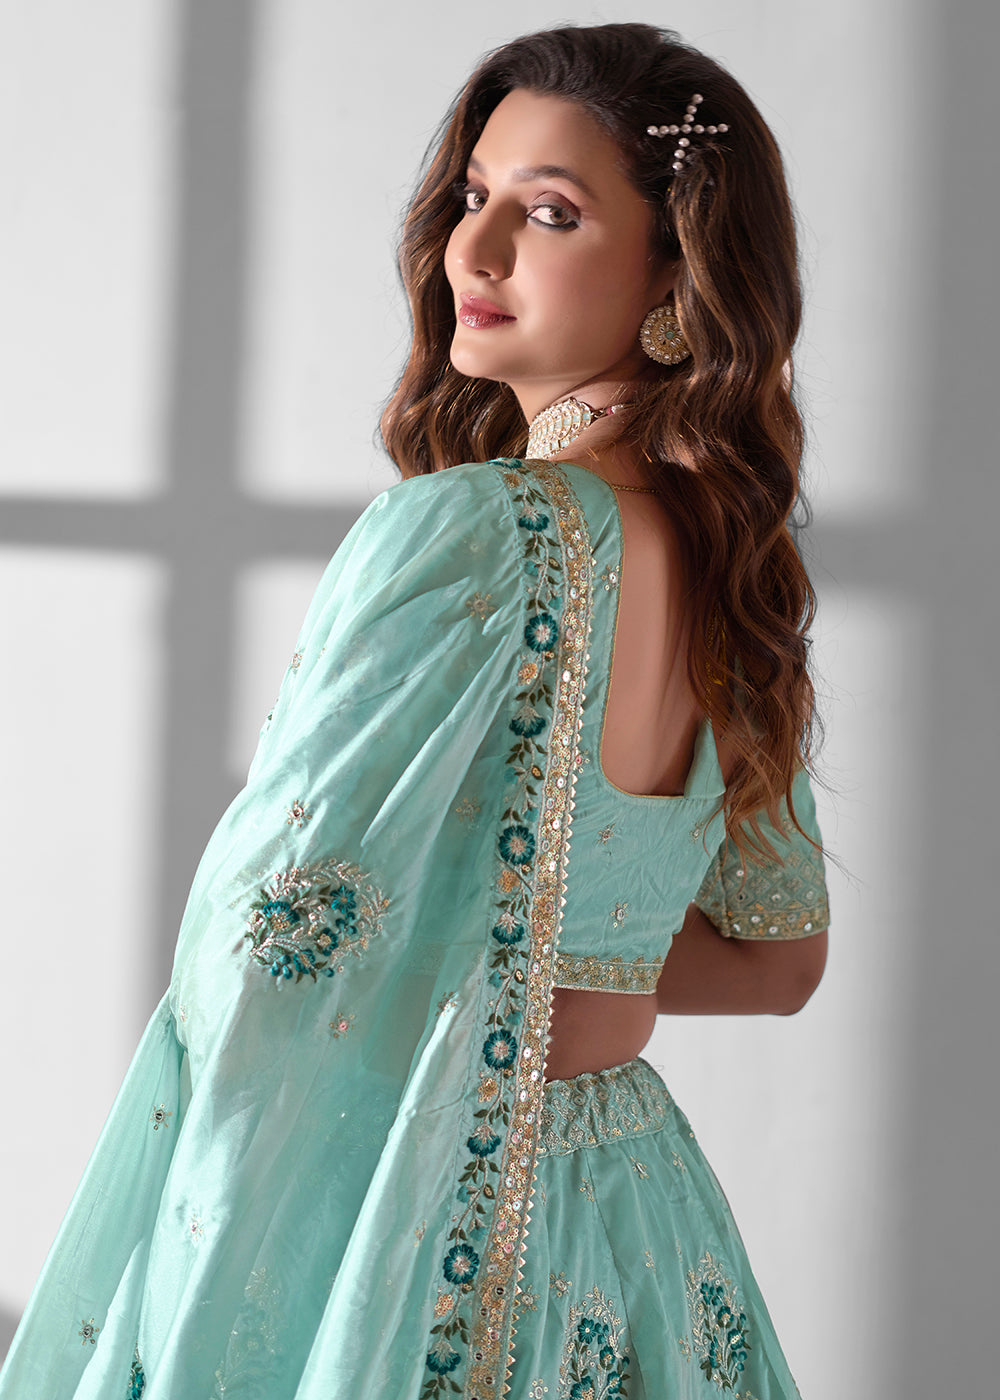 Buy Now Sky Blue Multi Embroidered Wedding Festive Lehenga Choli Online in USA, UK, Canada & Worldwide at Empress Clothing. 